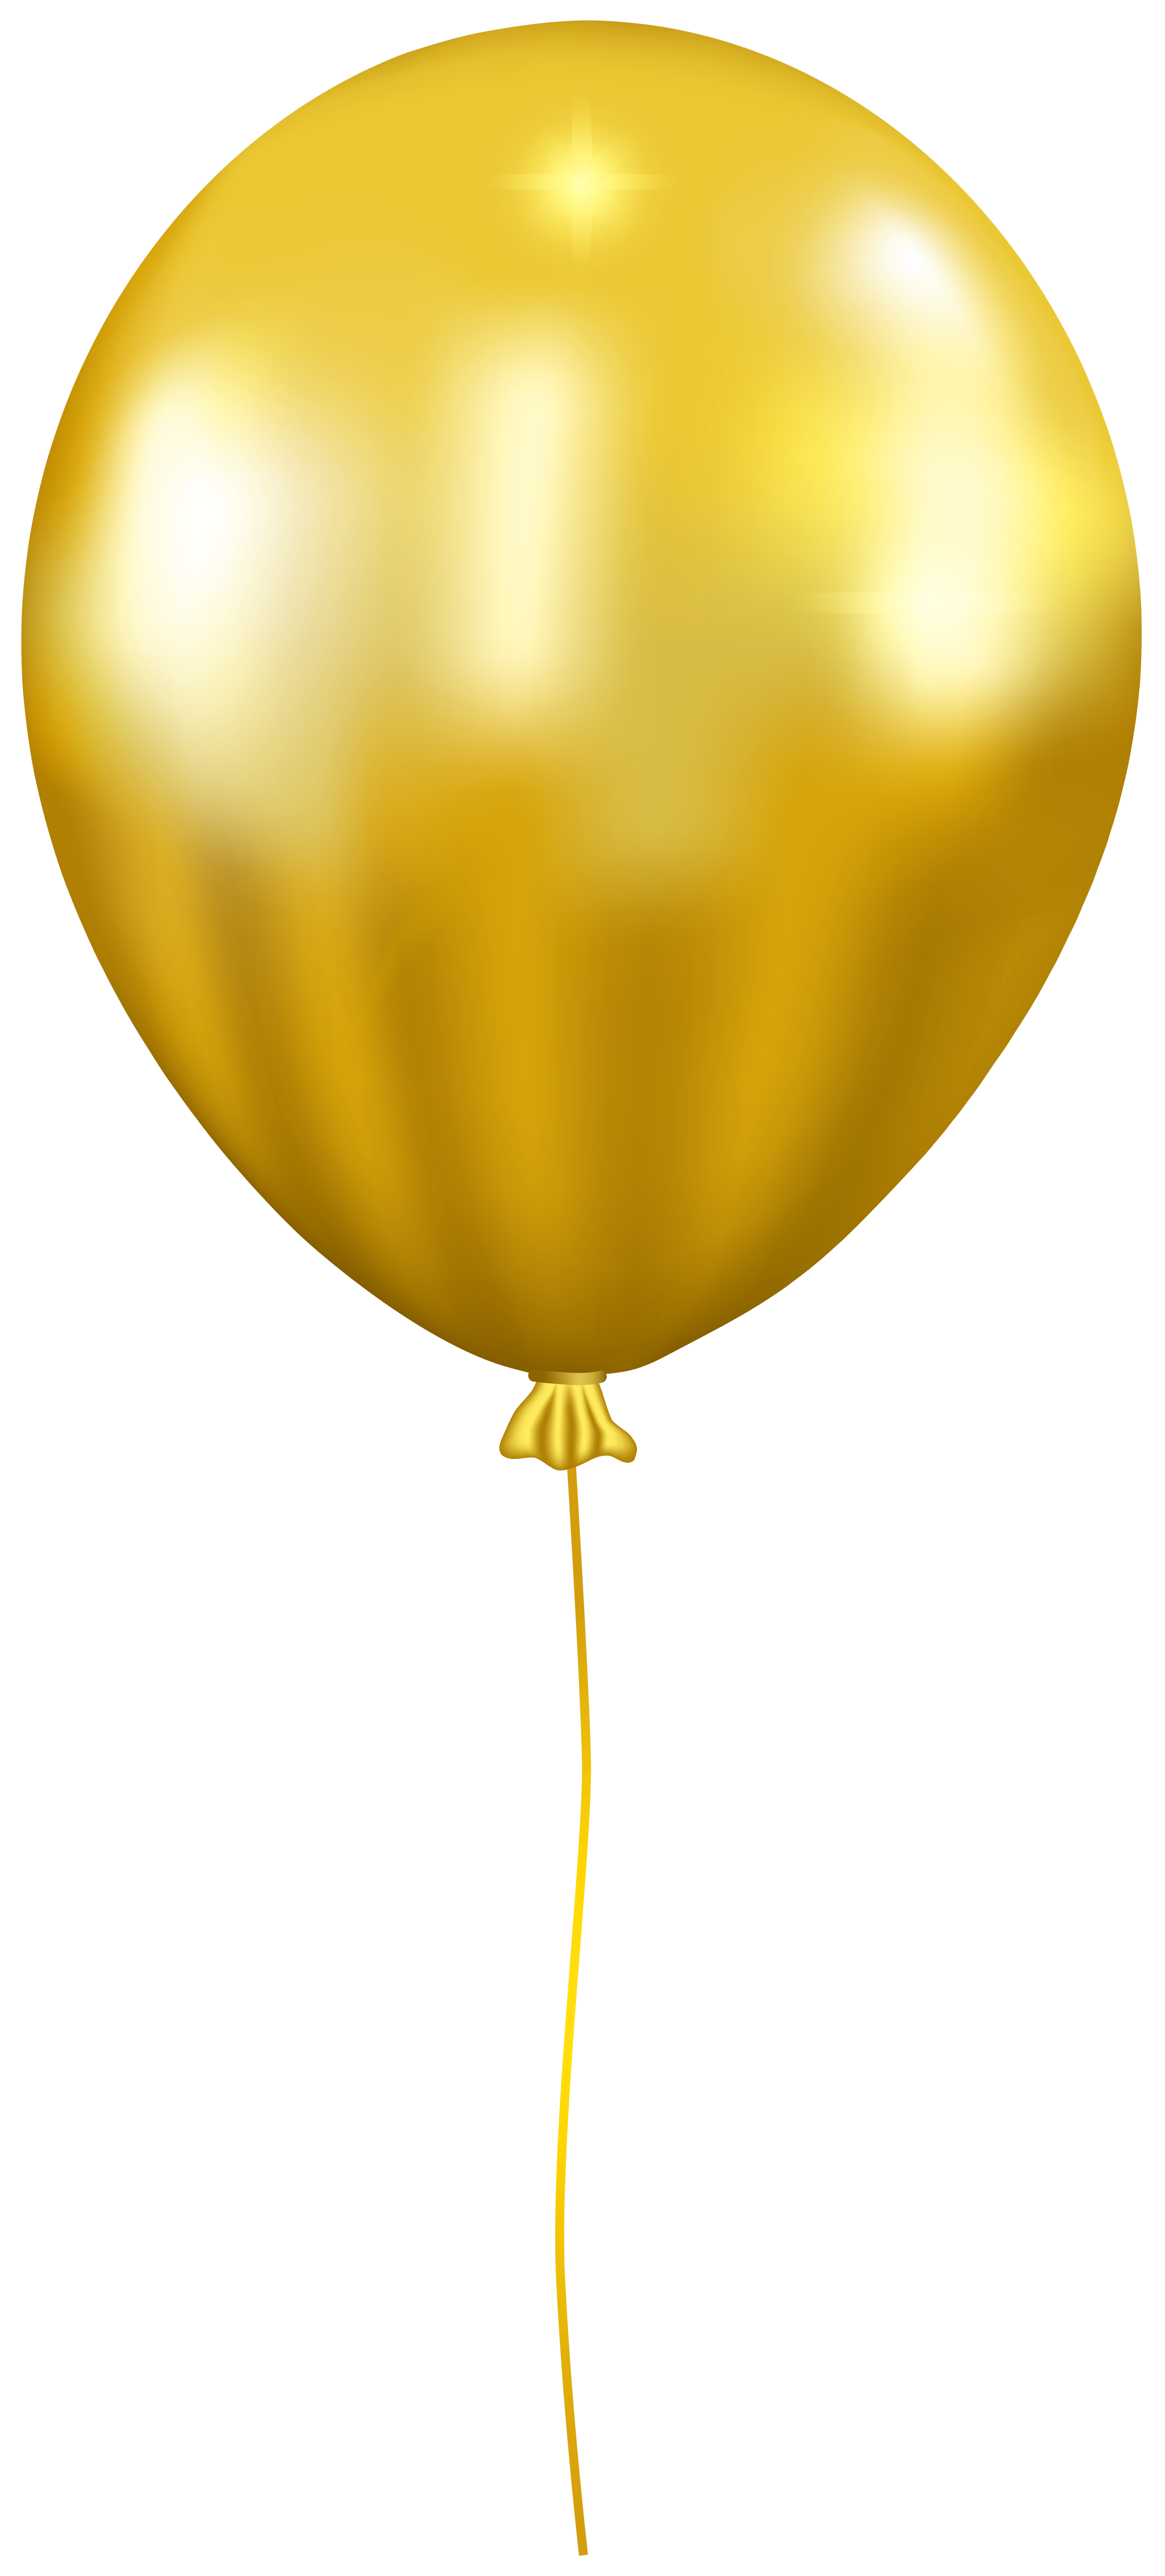 Gold Balloon Transparent Image.